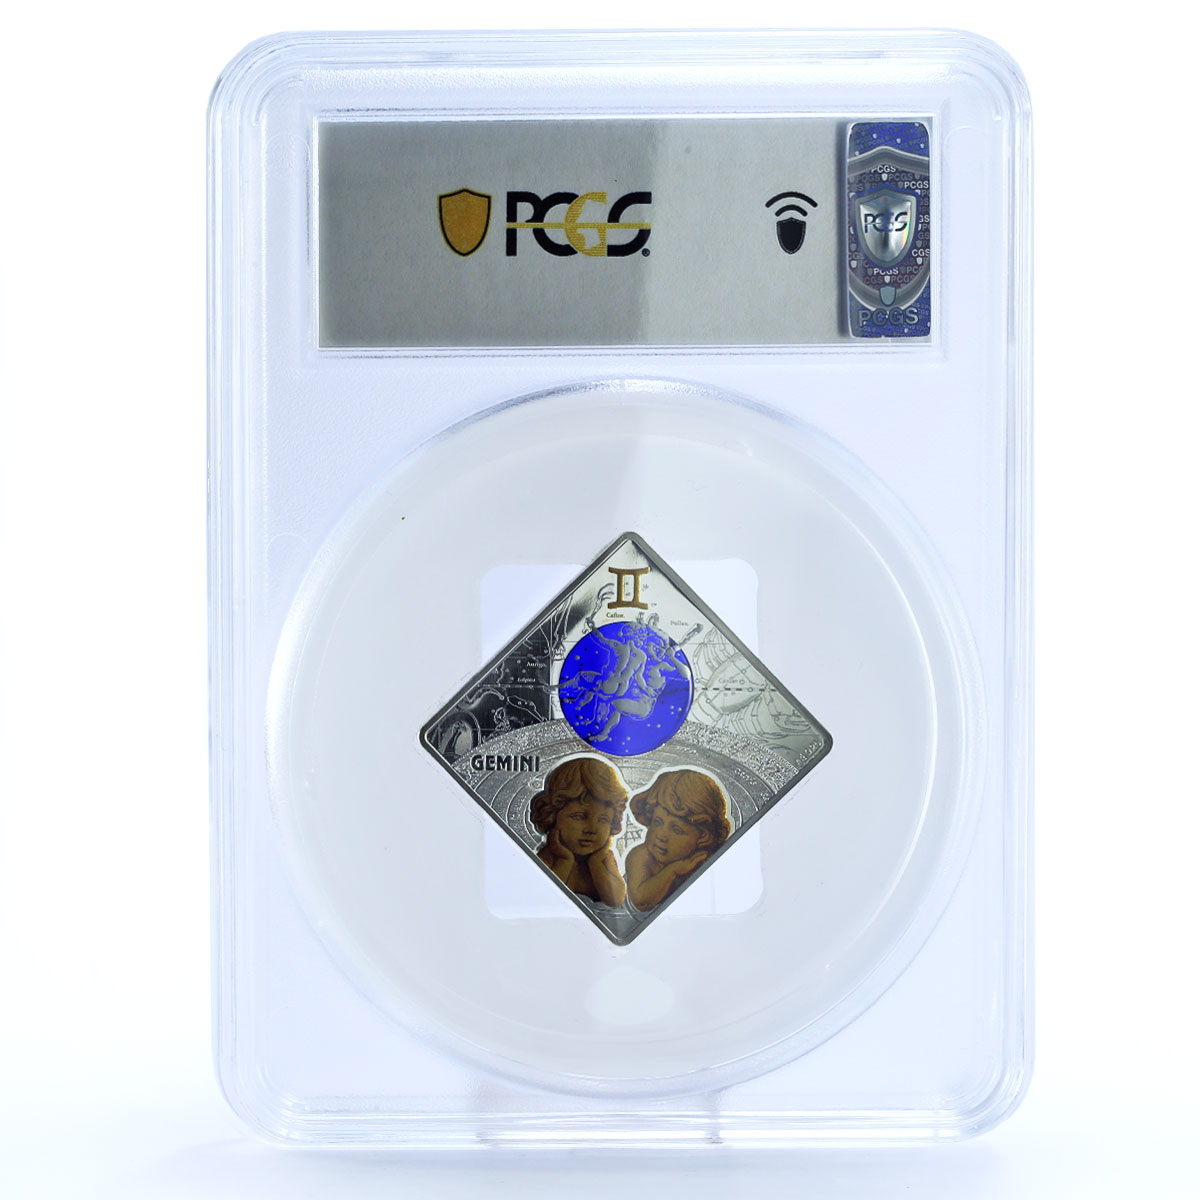 Macedonia 100 denari Zodiac Signs series Gemini PR70 PCGS silver coin 2018